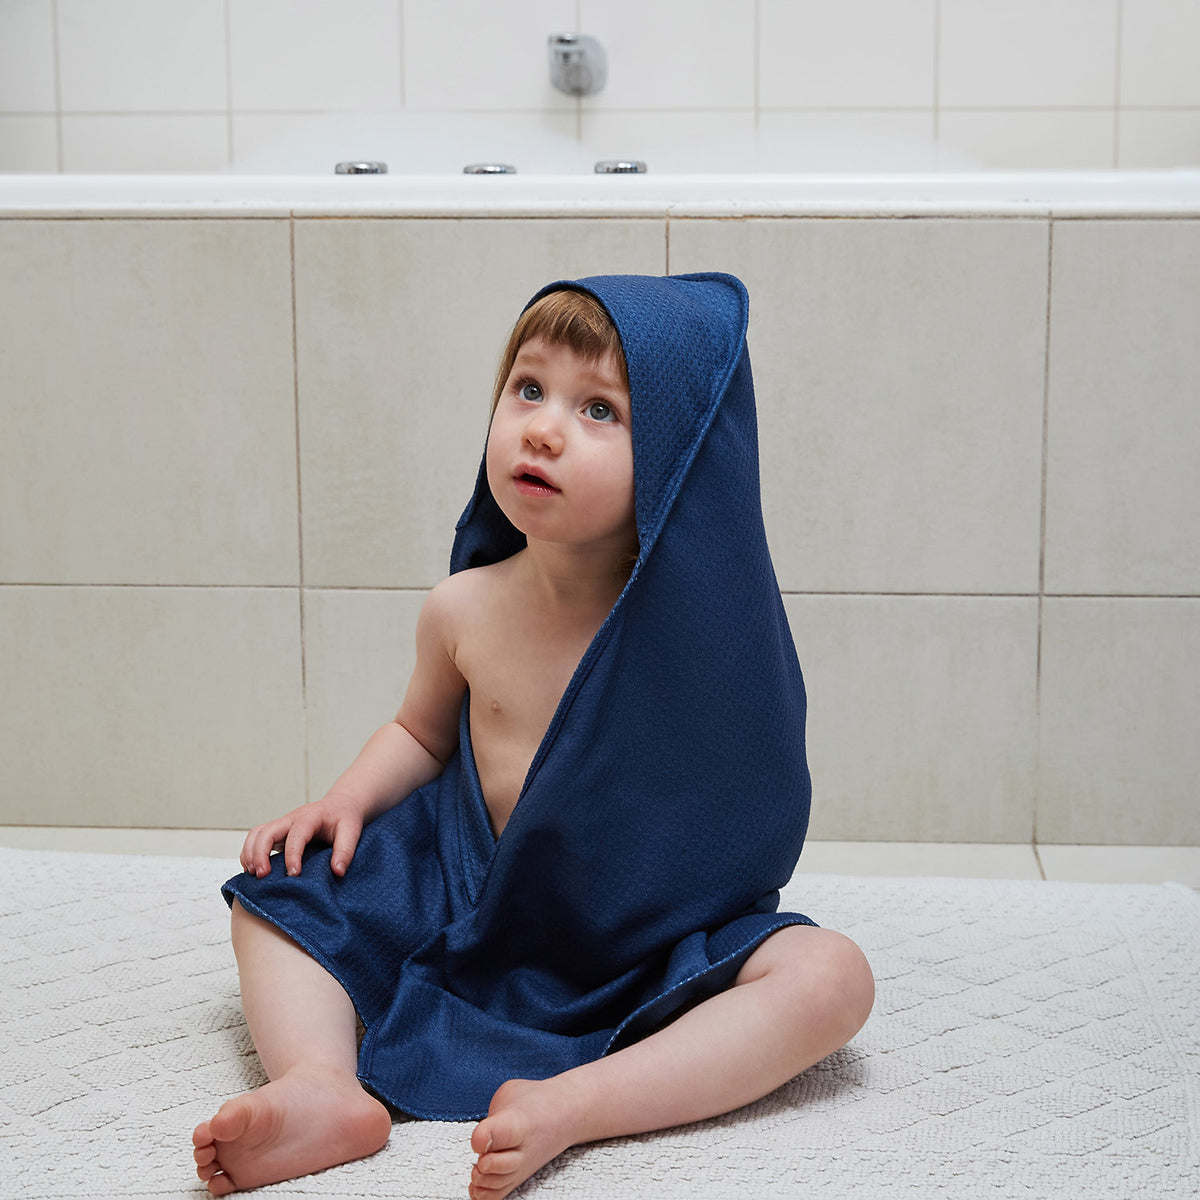 Dock & Bay Baby Hooded Towel - Classic - Midnight Navy